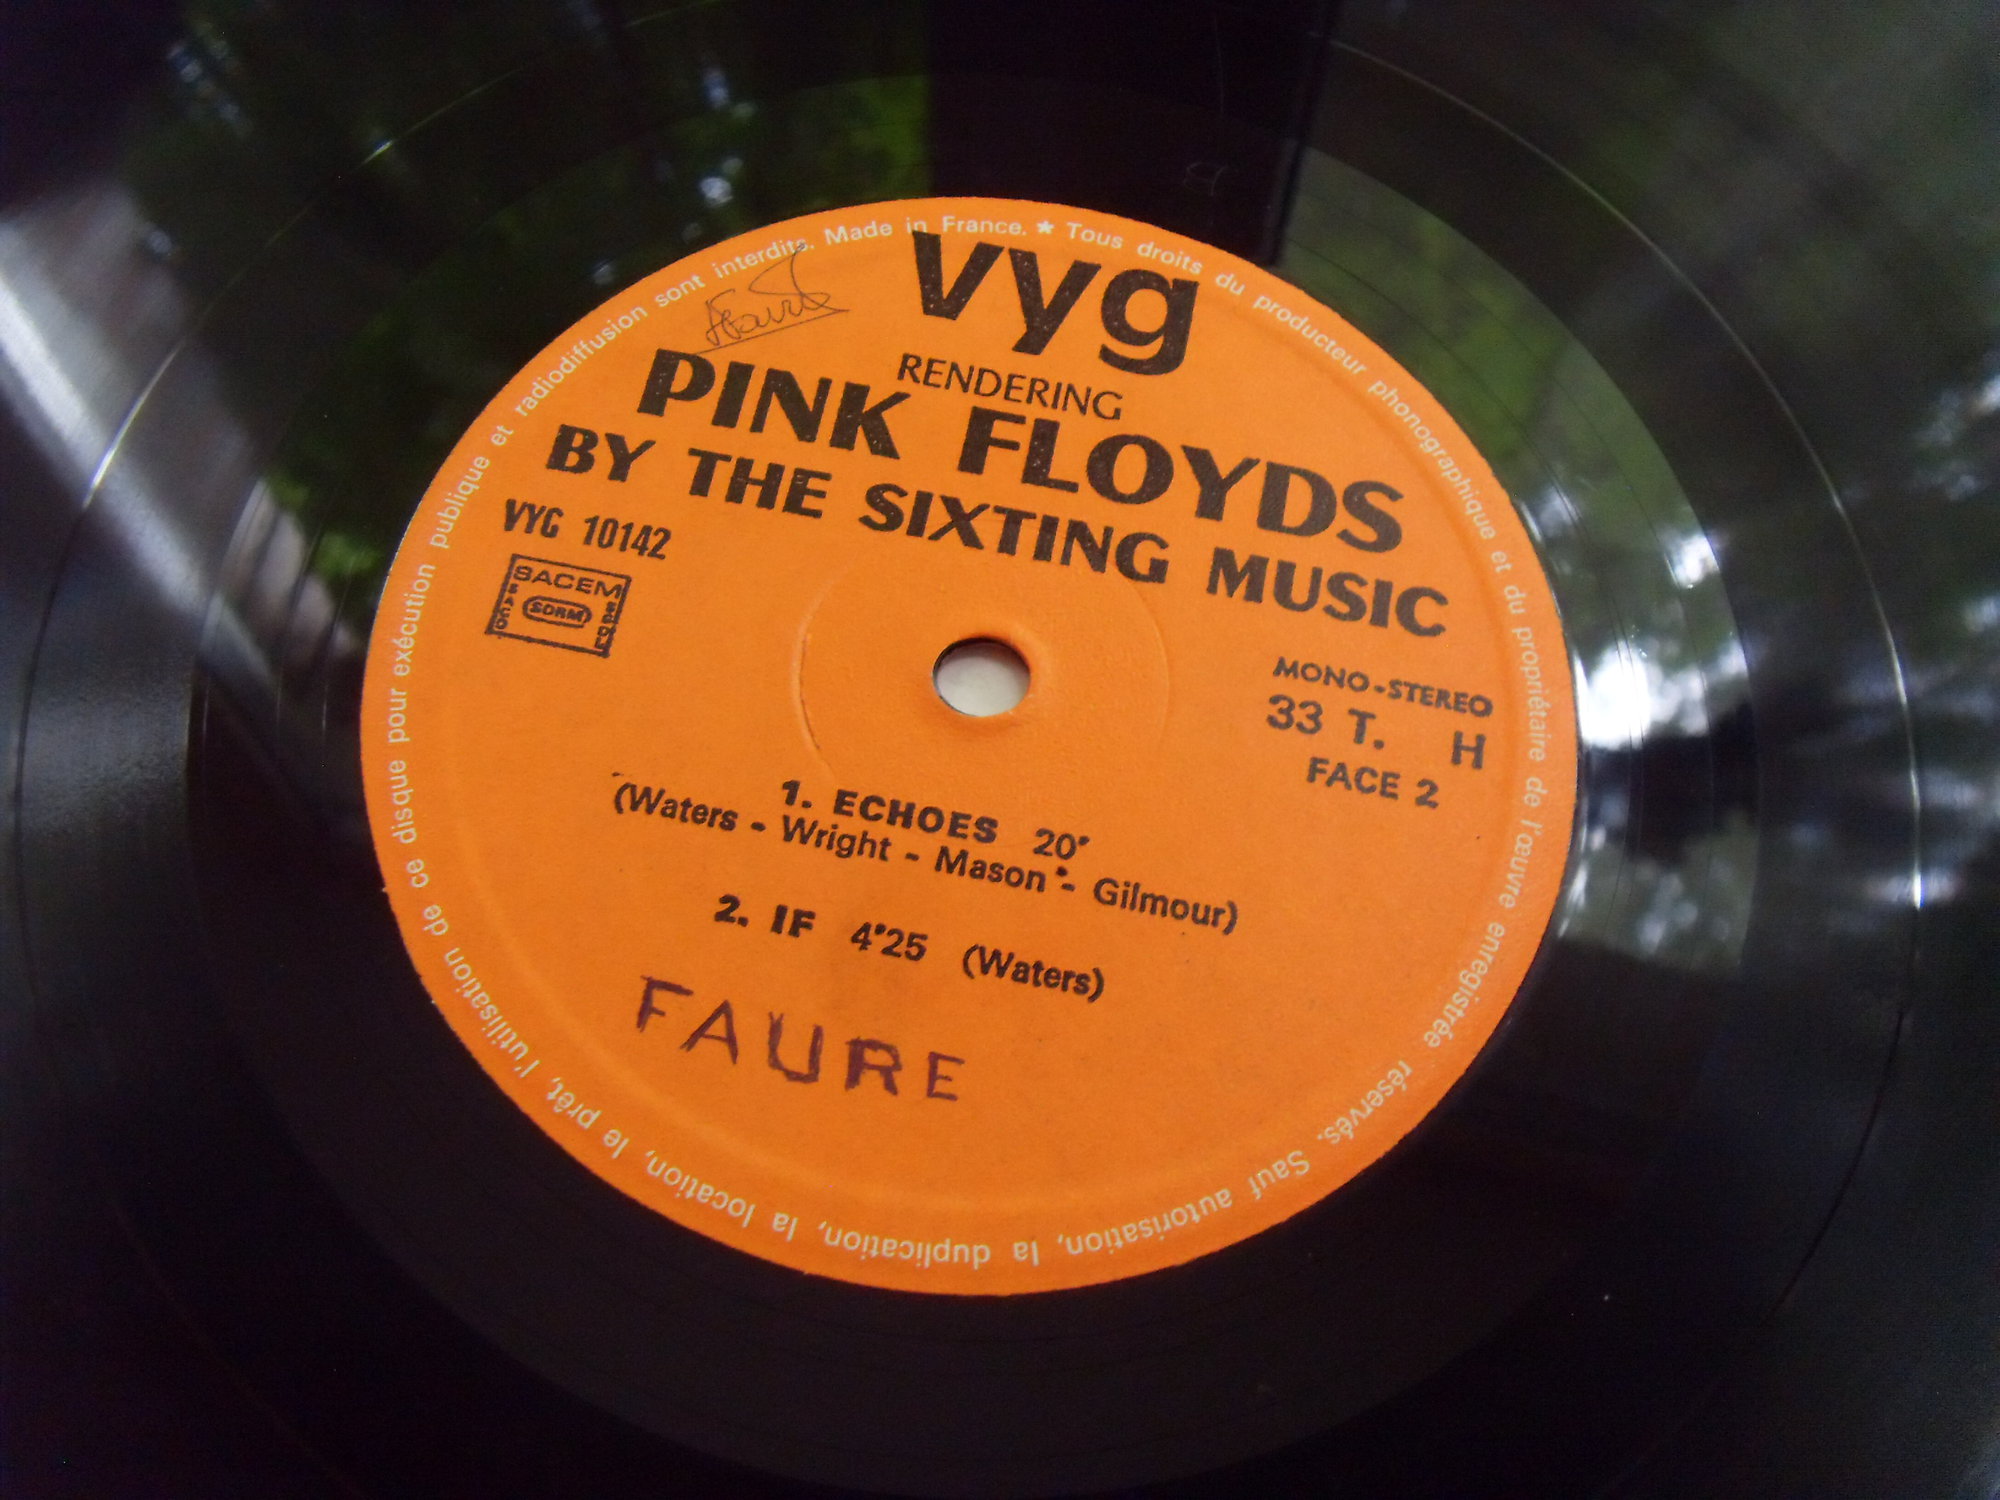 PINK FLOYDS SIXTING MUSIC Rendering Pink Floyds 4